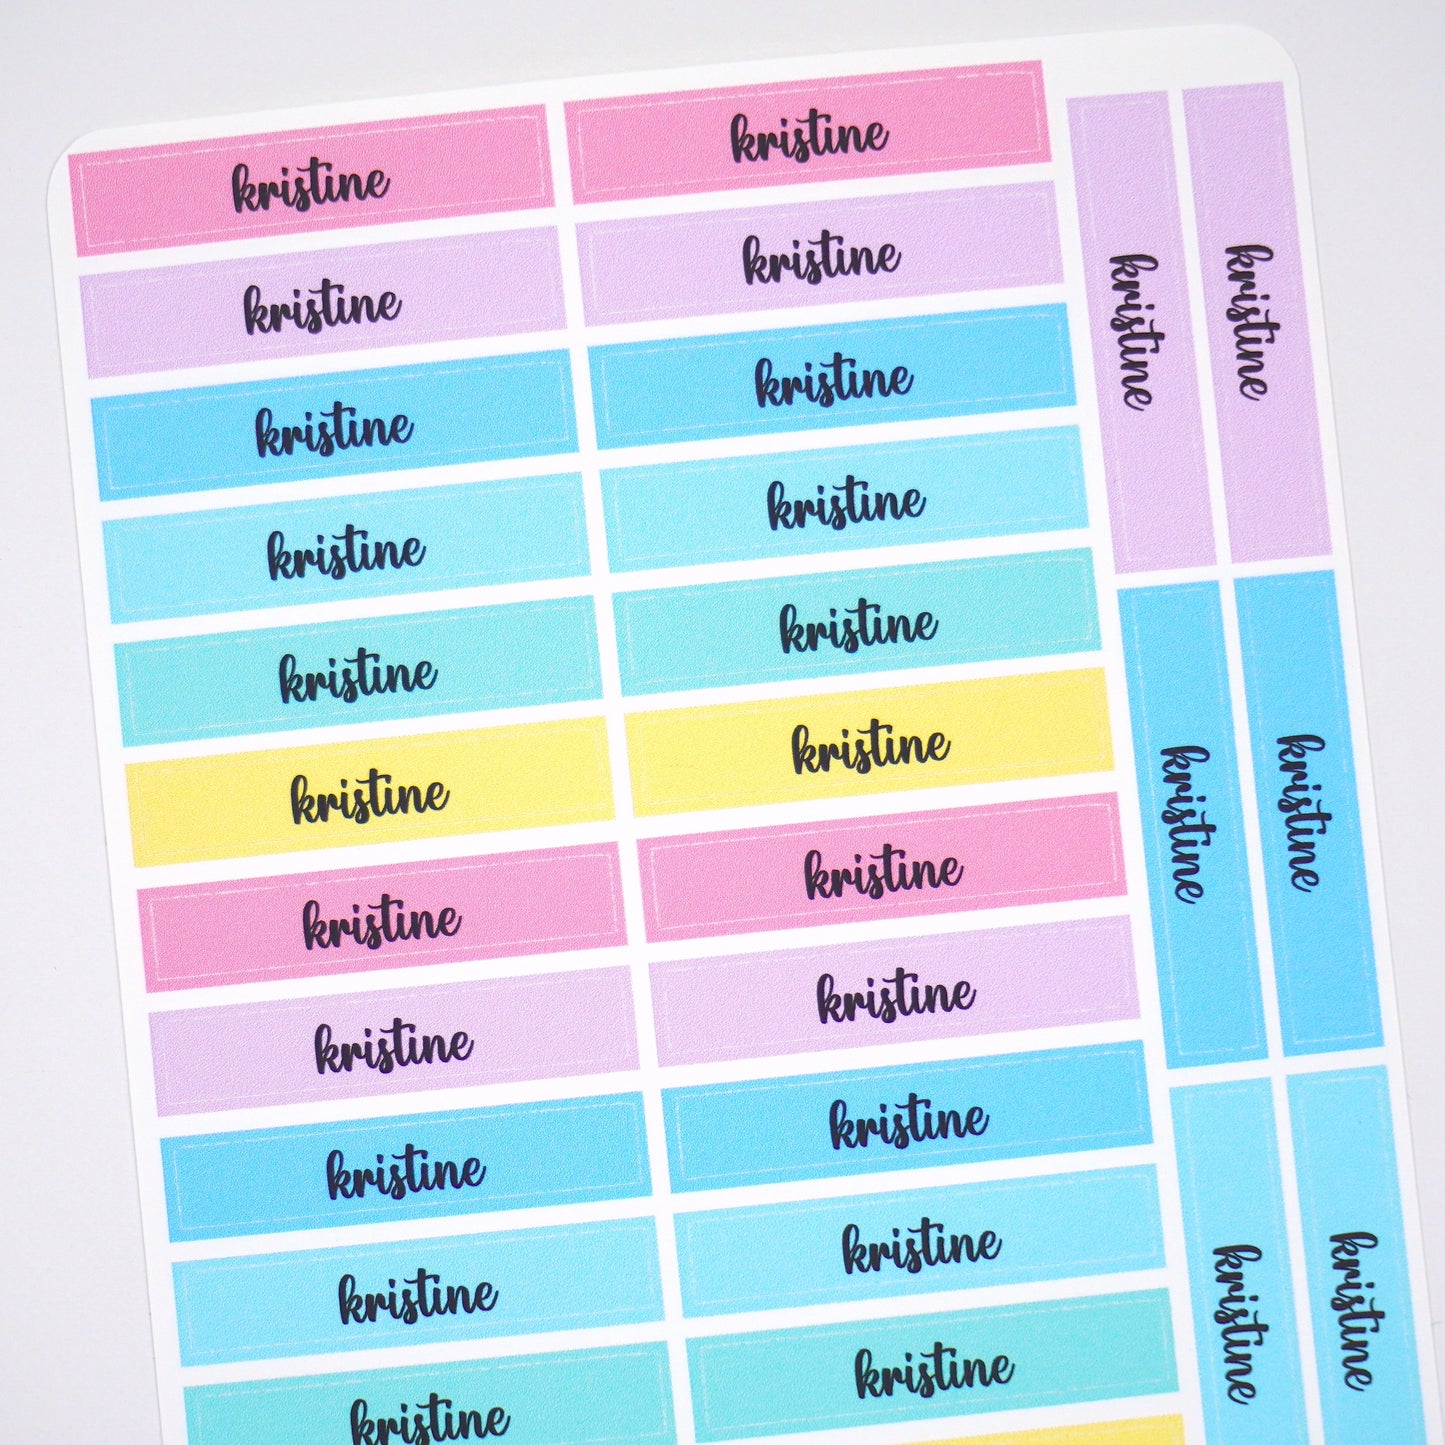 Rainbow Custom -Sticker label width 1.30in